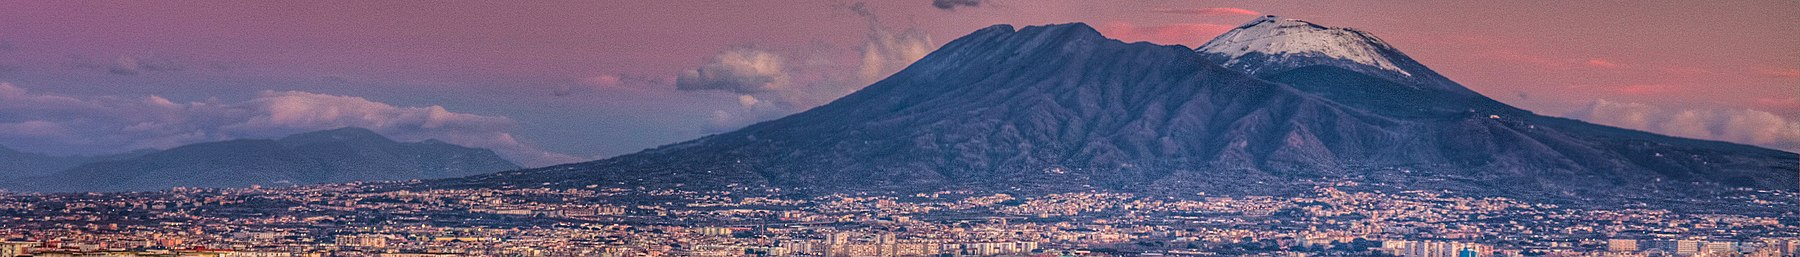 Monte Vesubio Wikivoyage banner.jpg